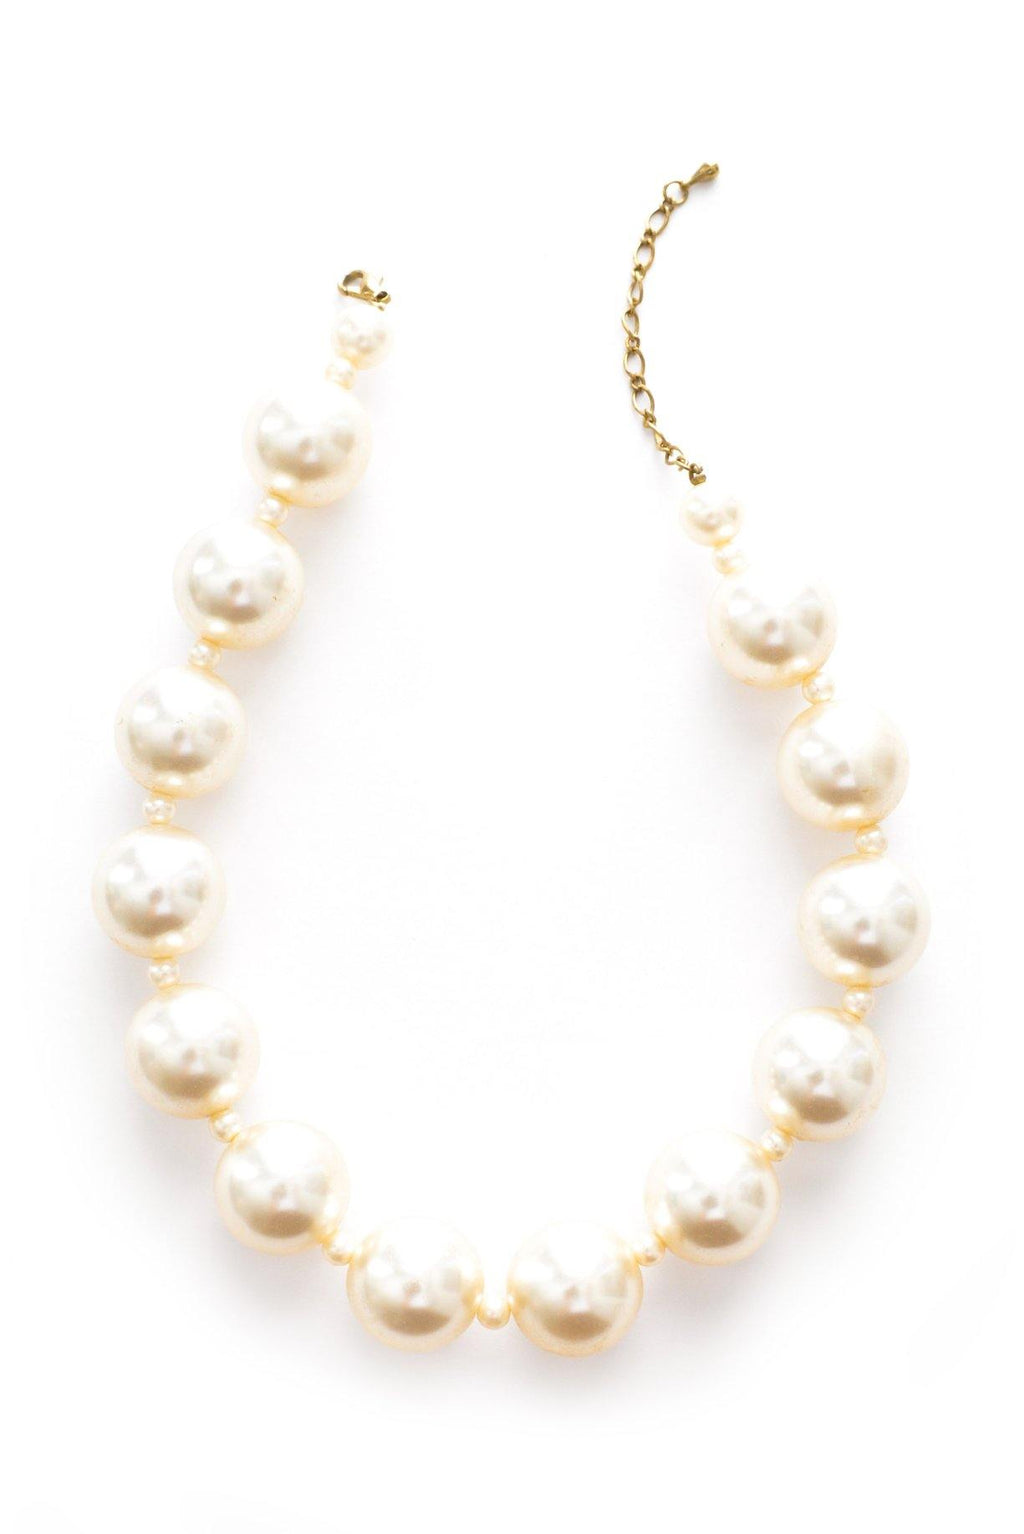 Shop Vintage Necklaces | Delicate, Statement, Pearl & Rhinestone ...